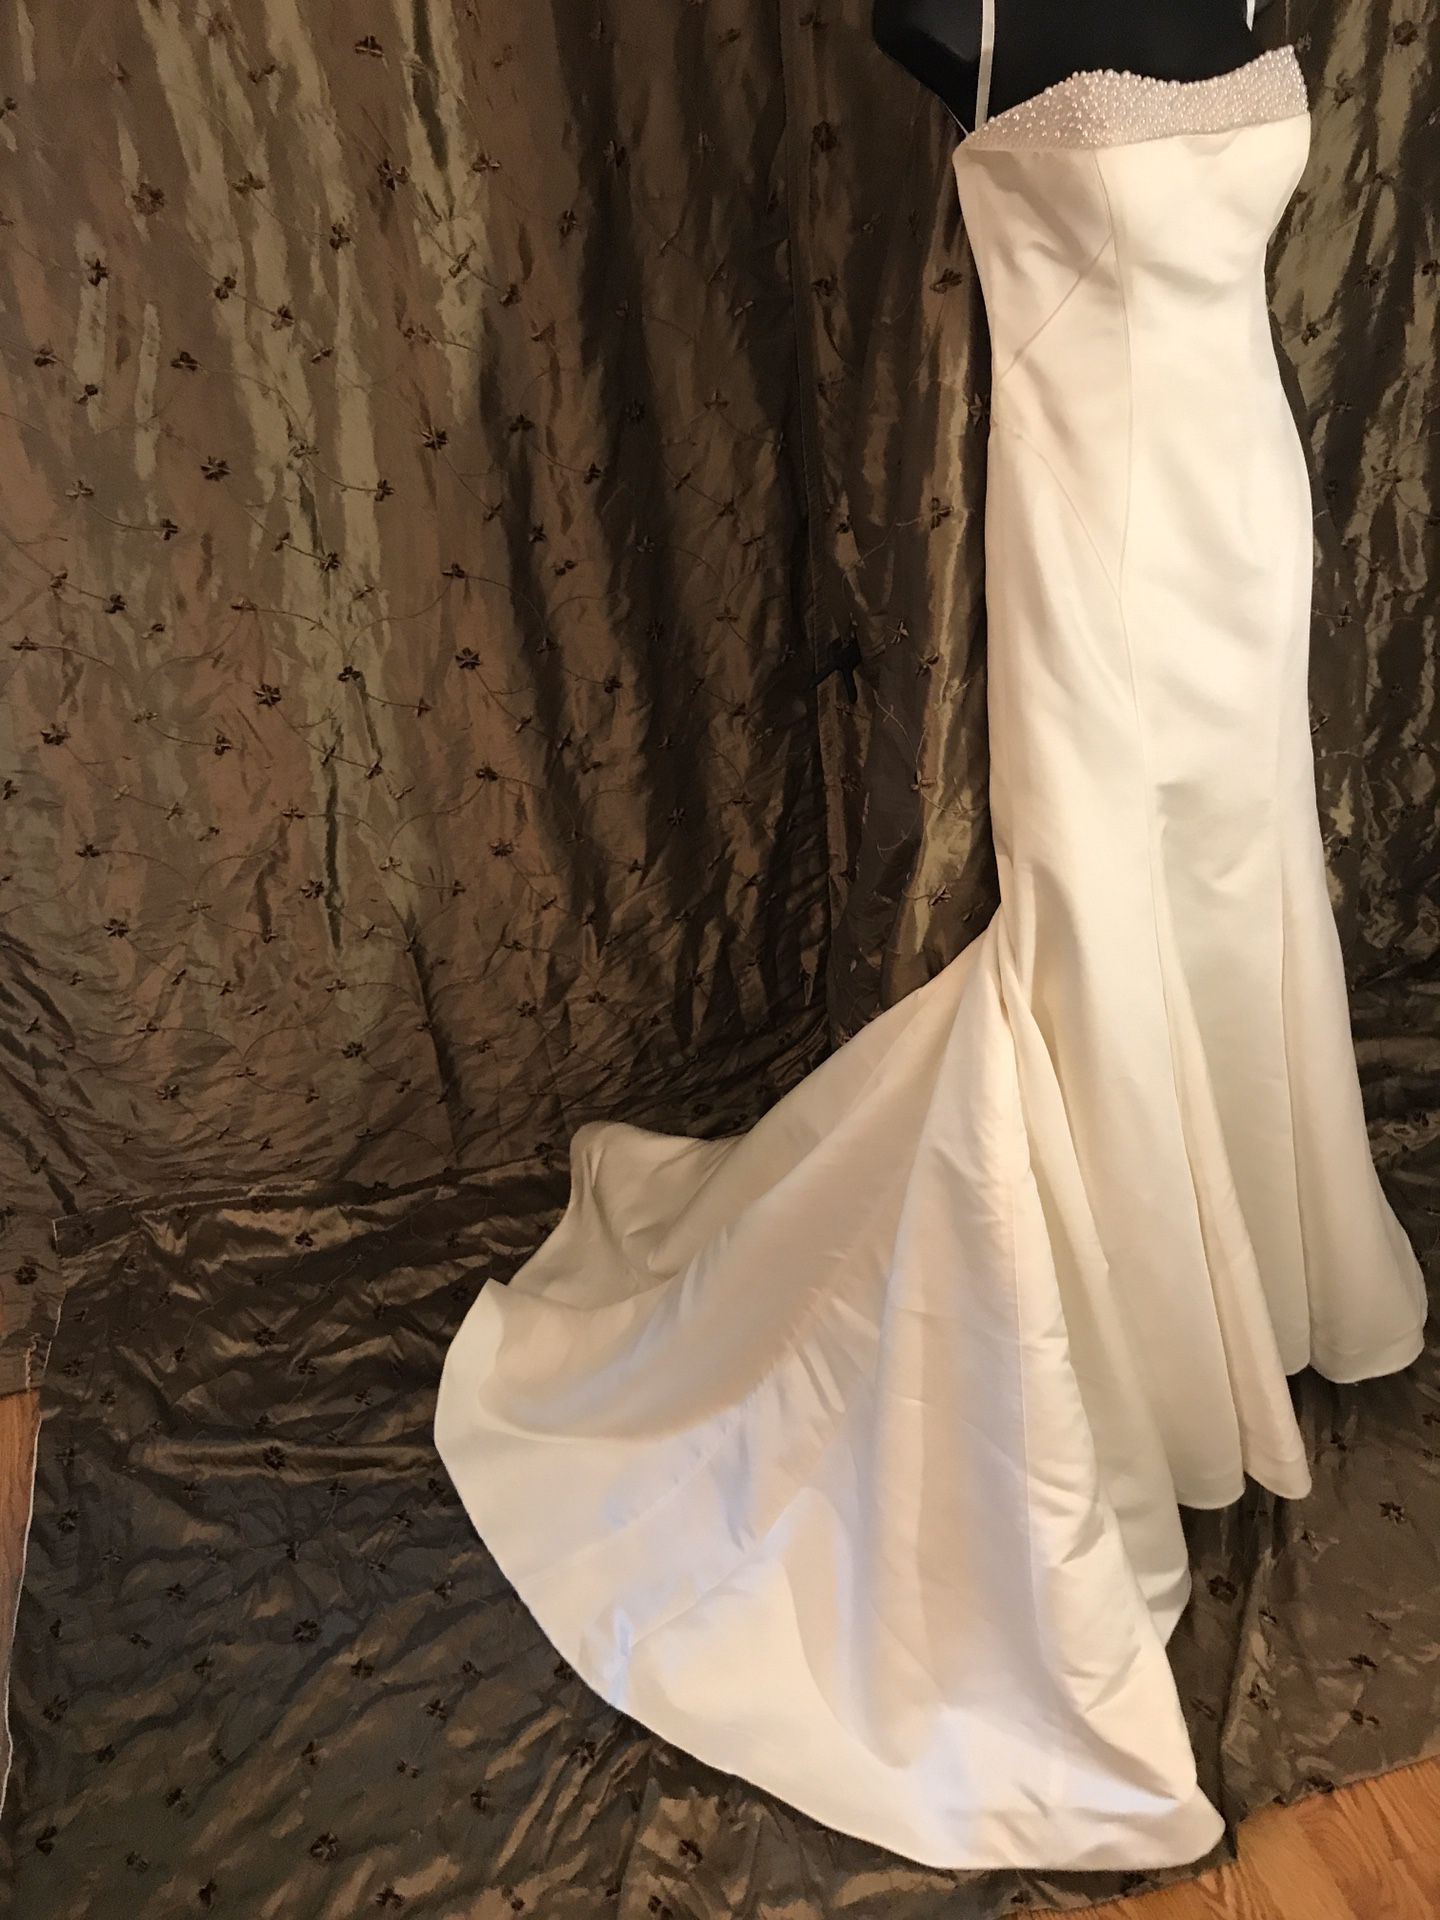 Wedding dress size 6, Pearl Ivory wedding dress, never worn.